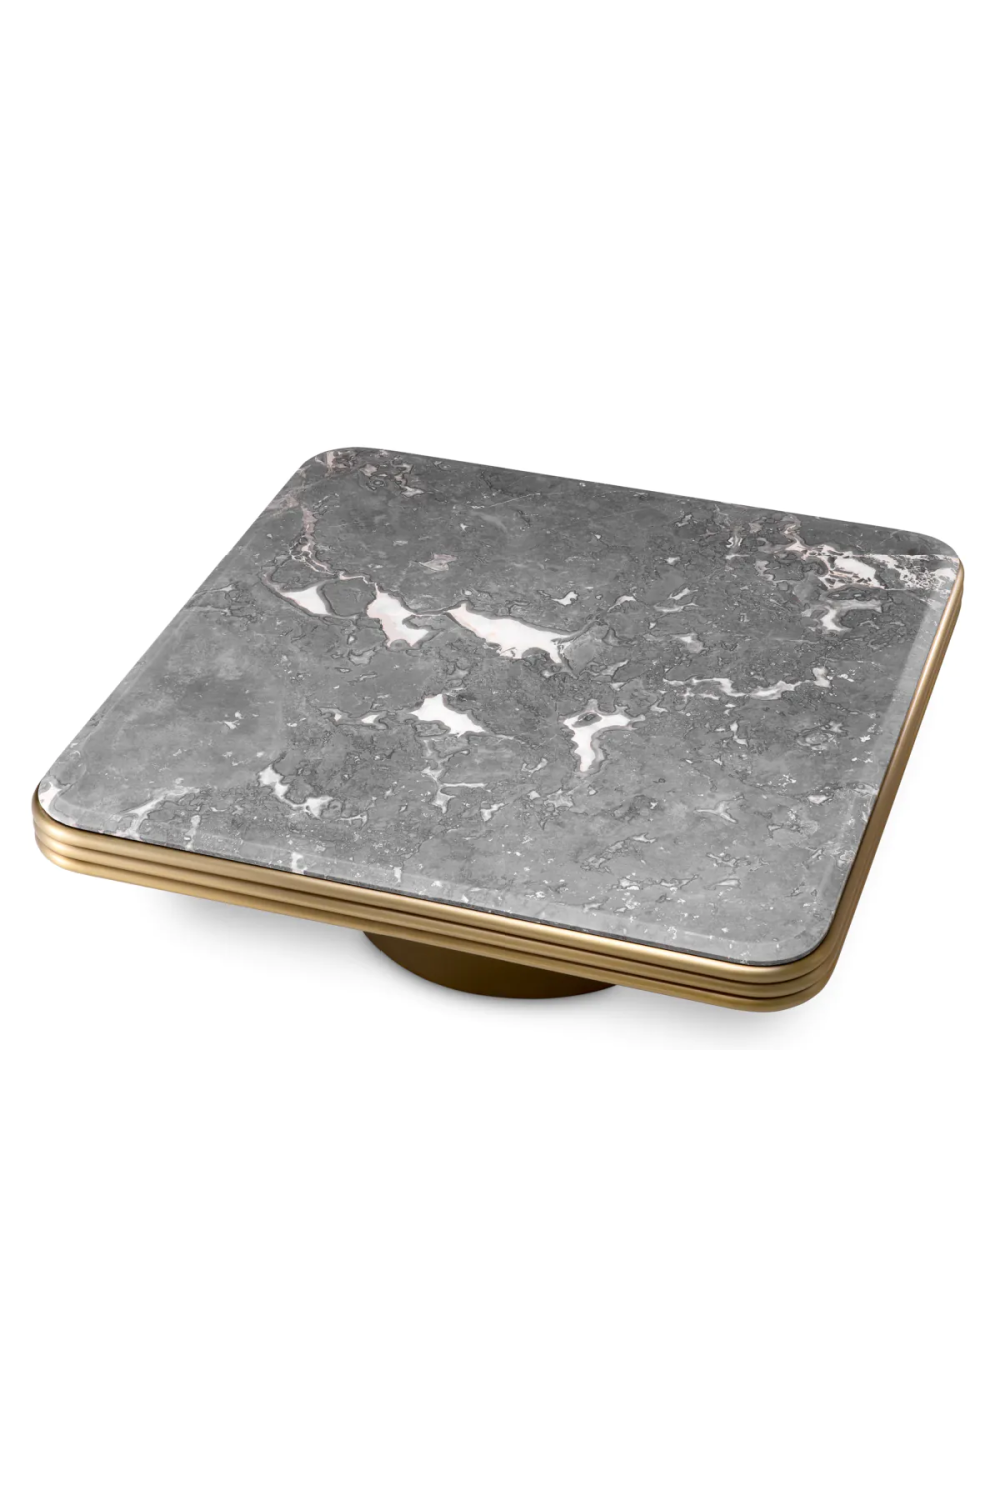 Square Gray Marble Coffee Table | Eichholtz Claremore | Oroa.com